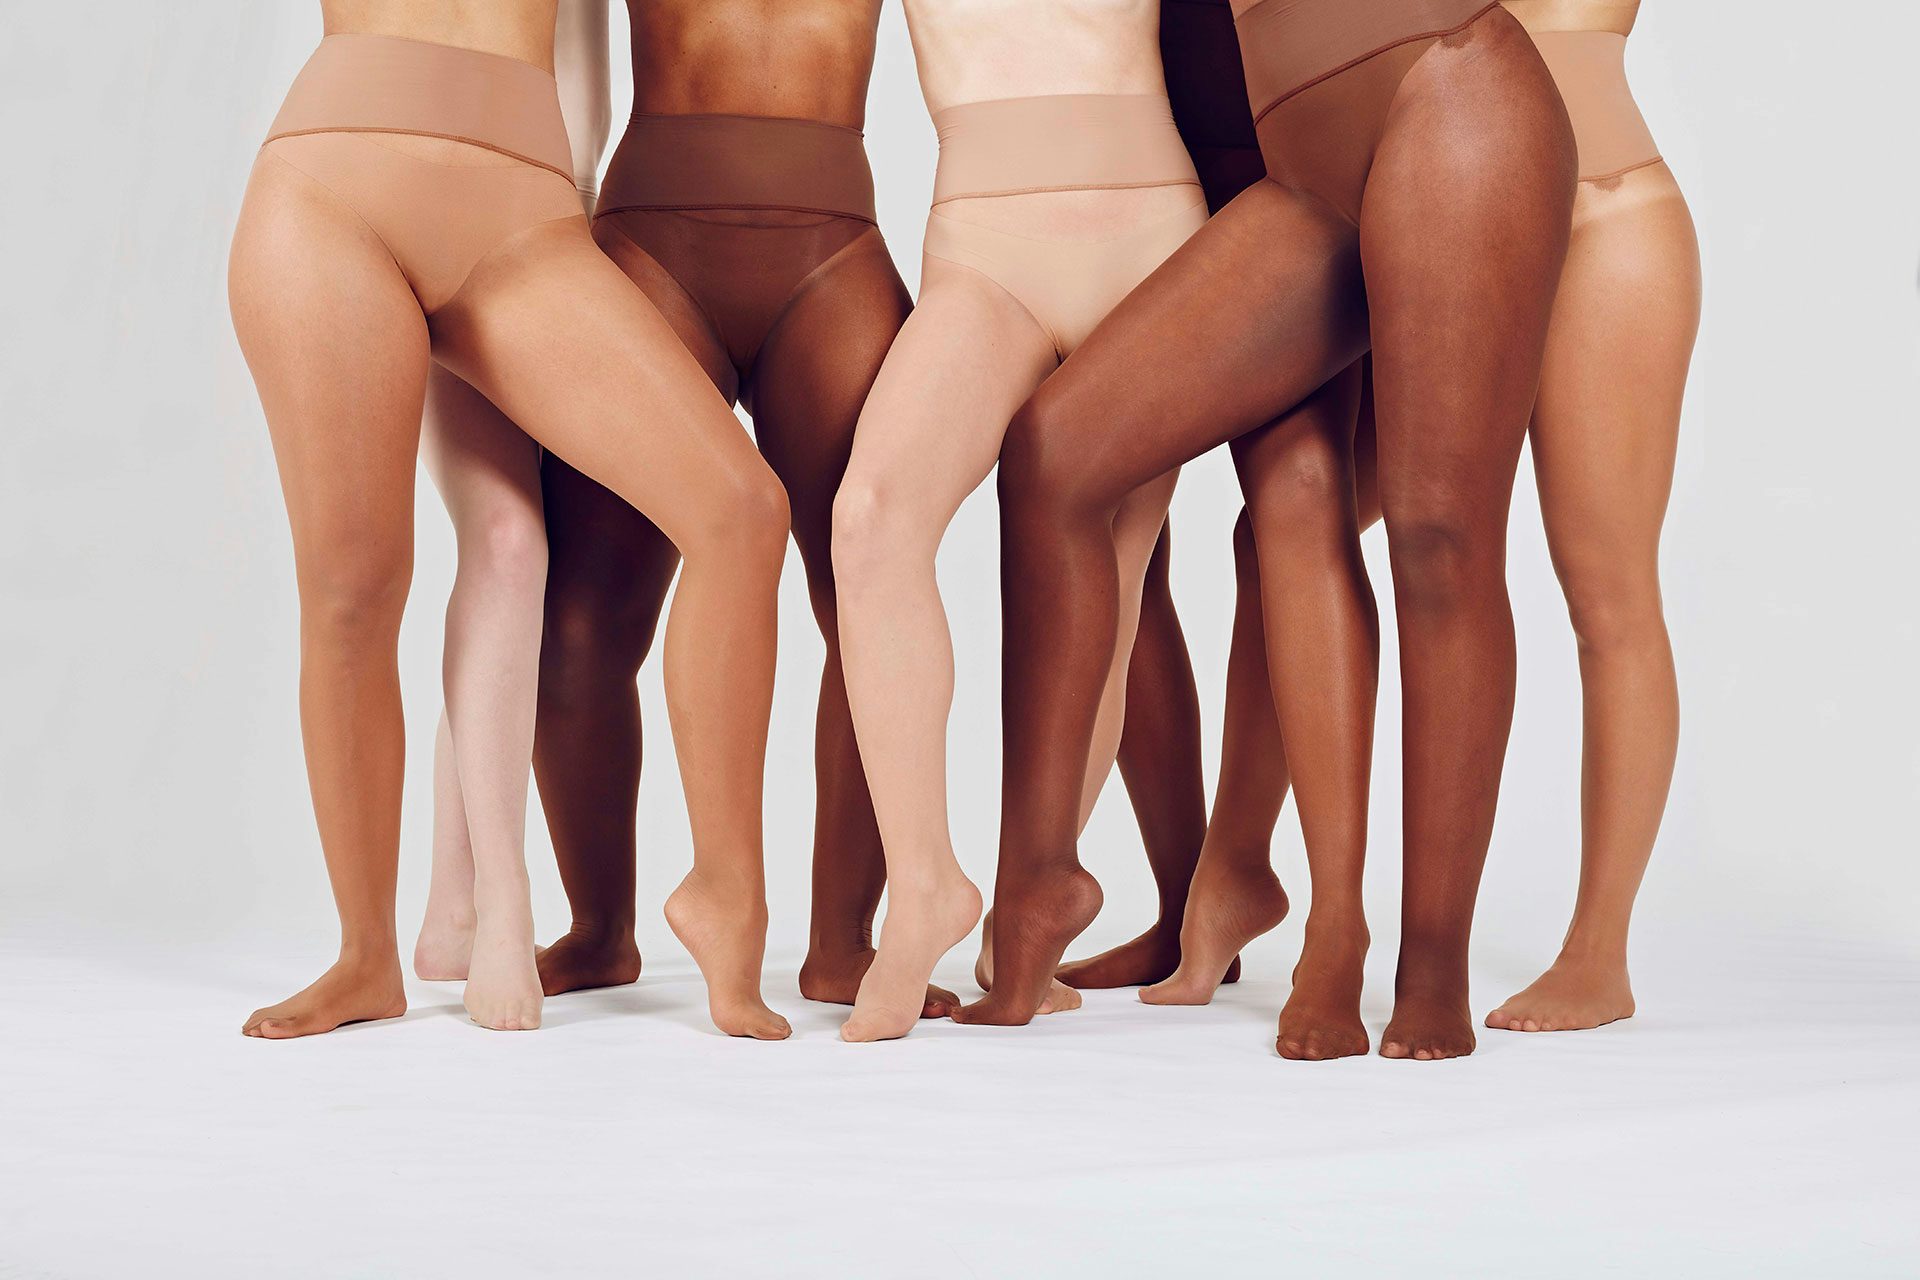 Why hosiery brand Heist is expanding into underwear